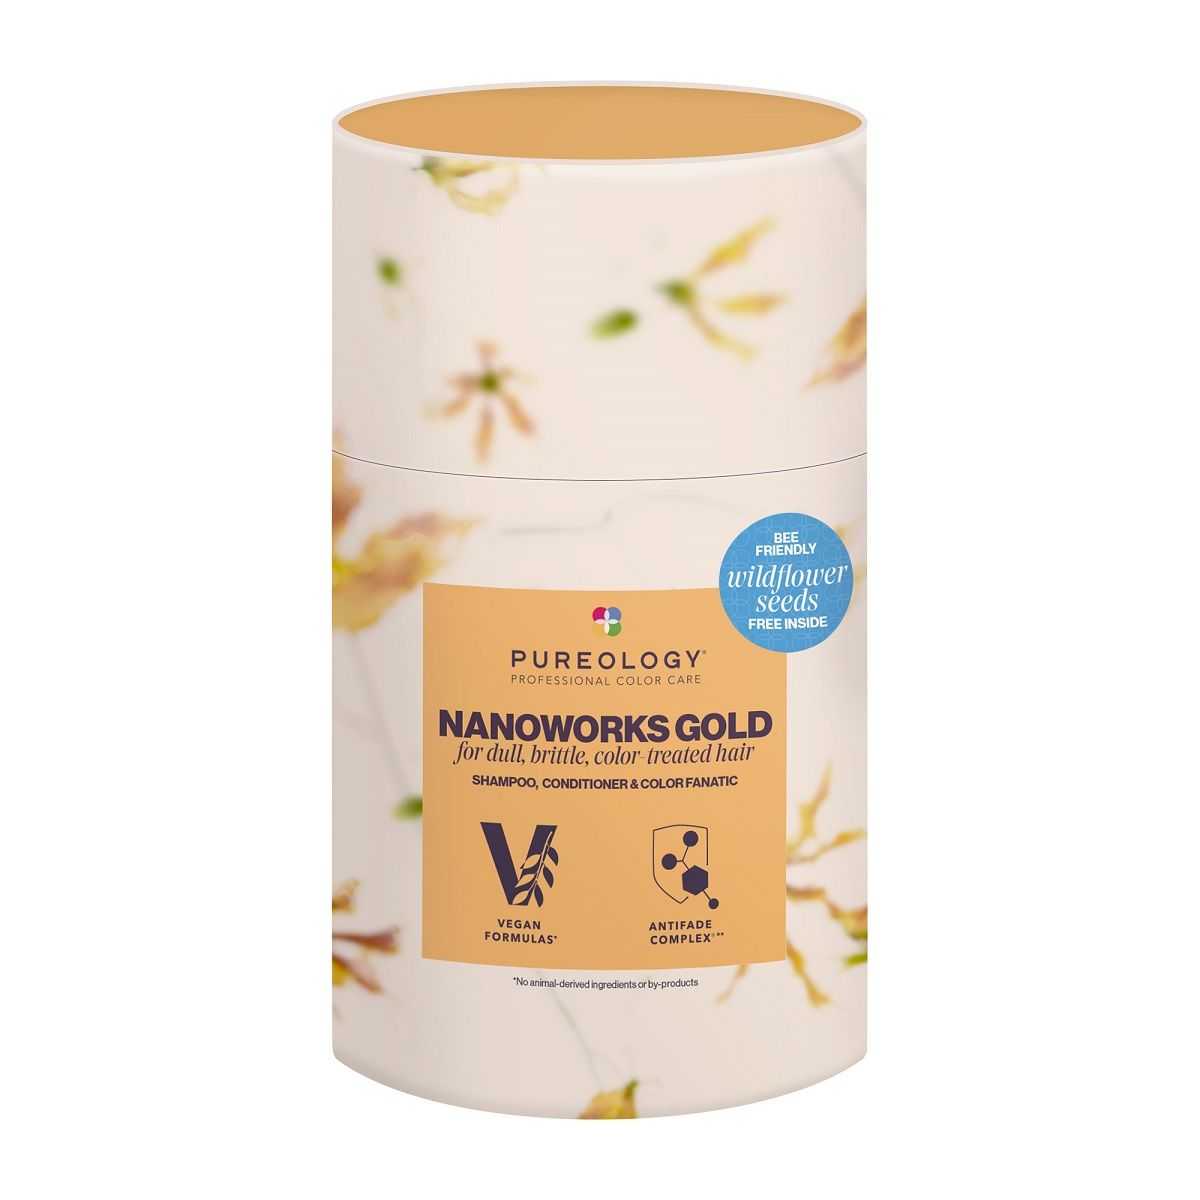 Pureology Nanoworks Gold Gift Set